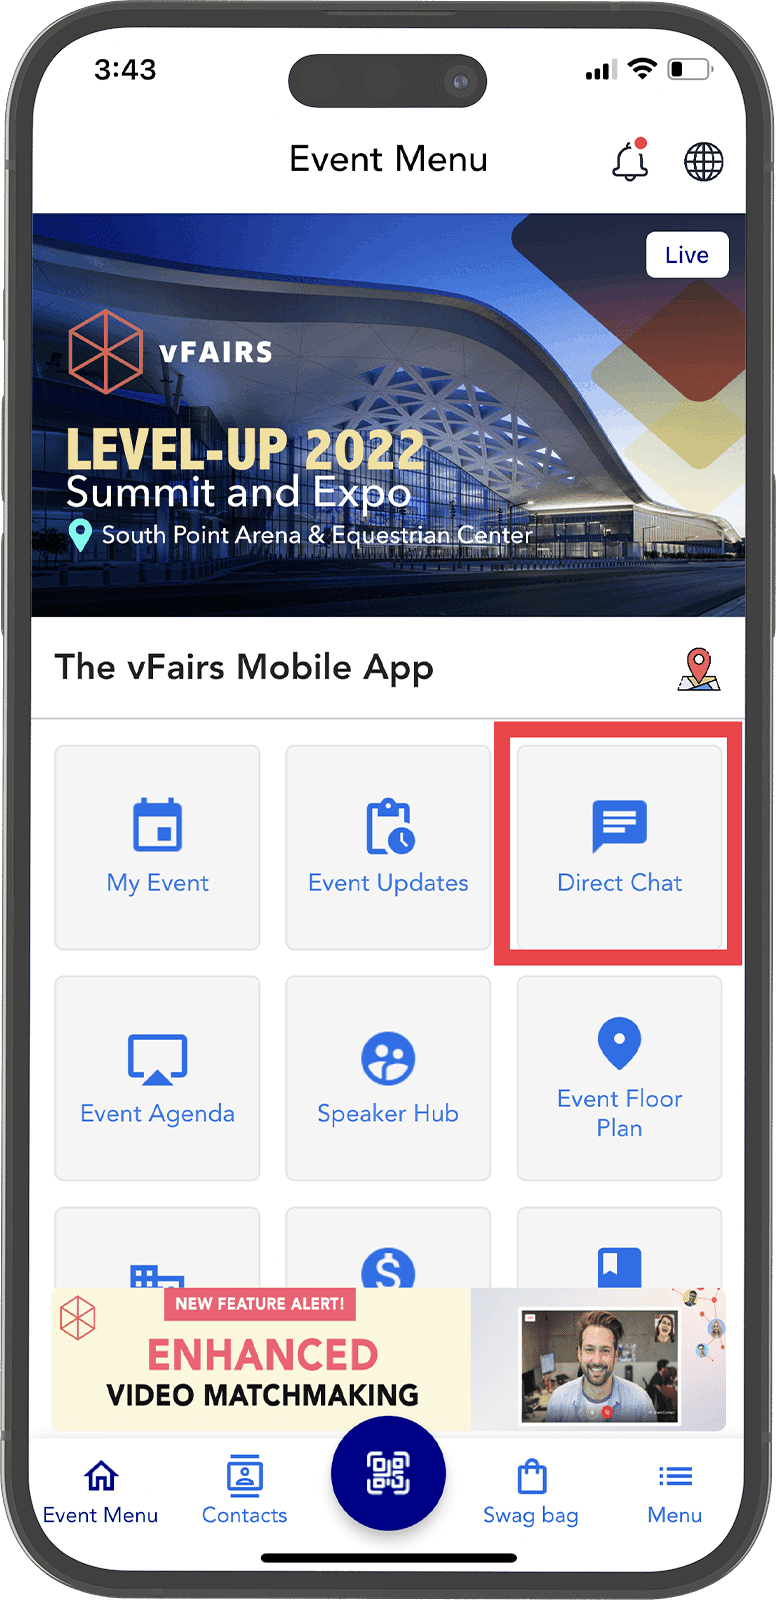 Direct chat tile - vFairs mobile app Event Menu